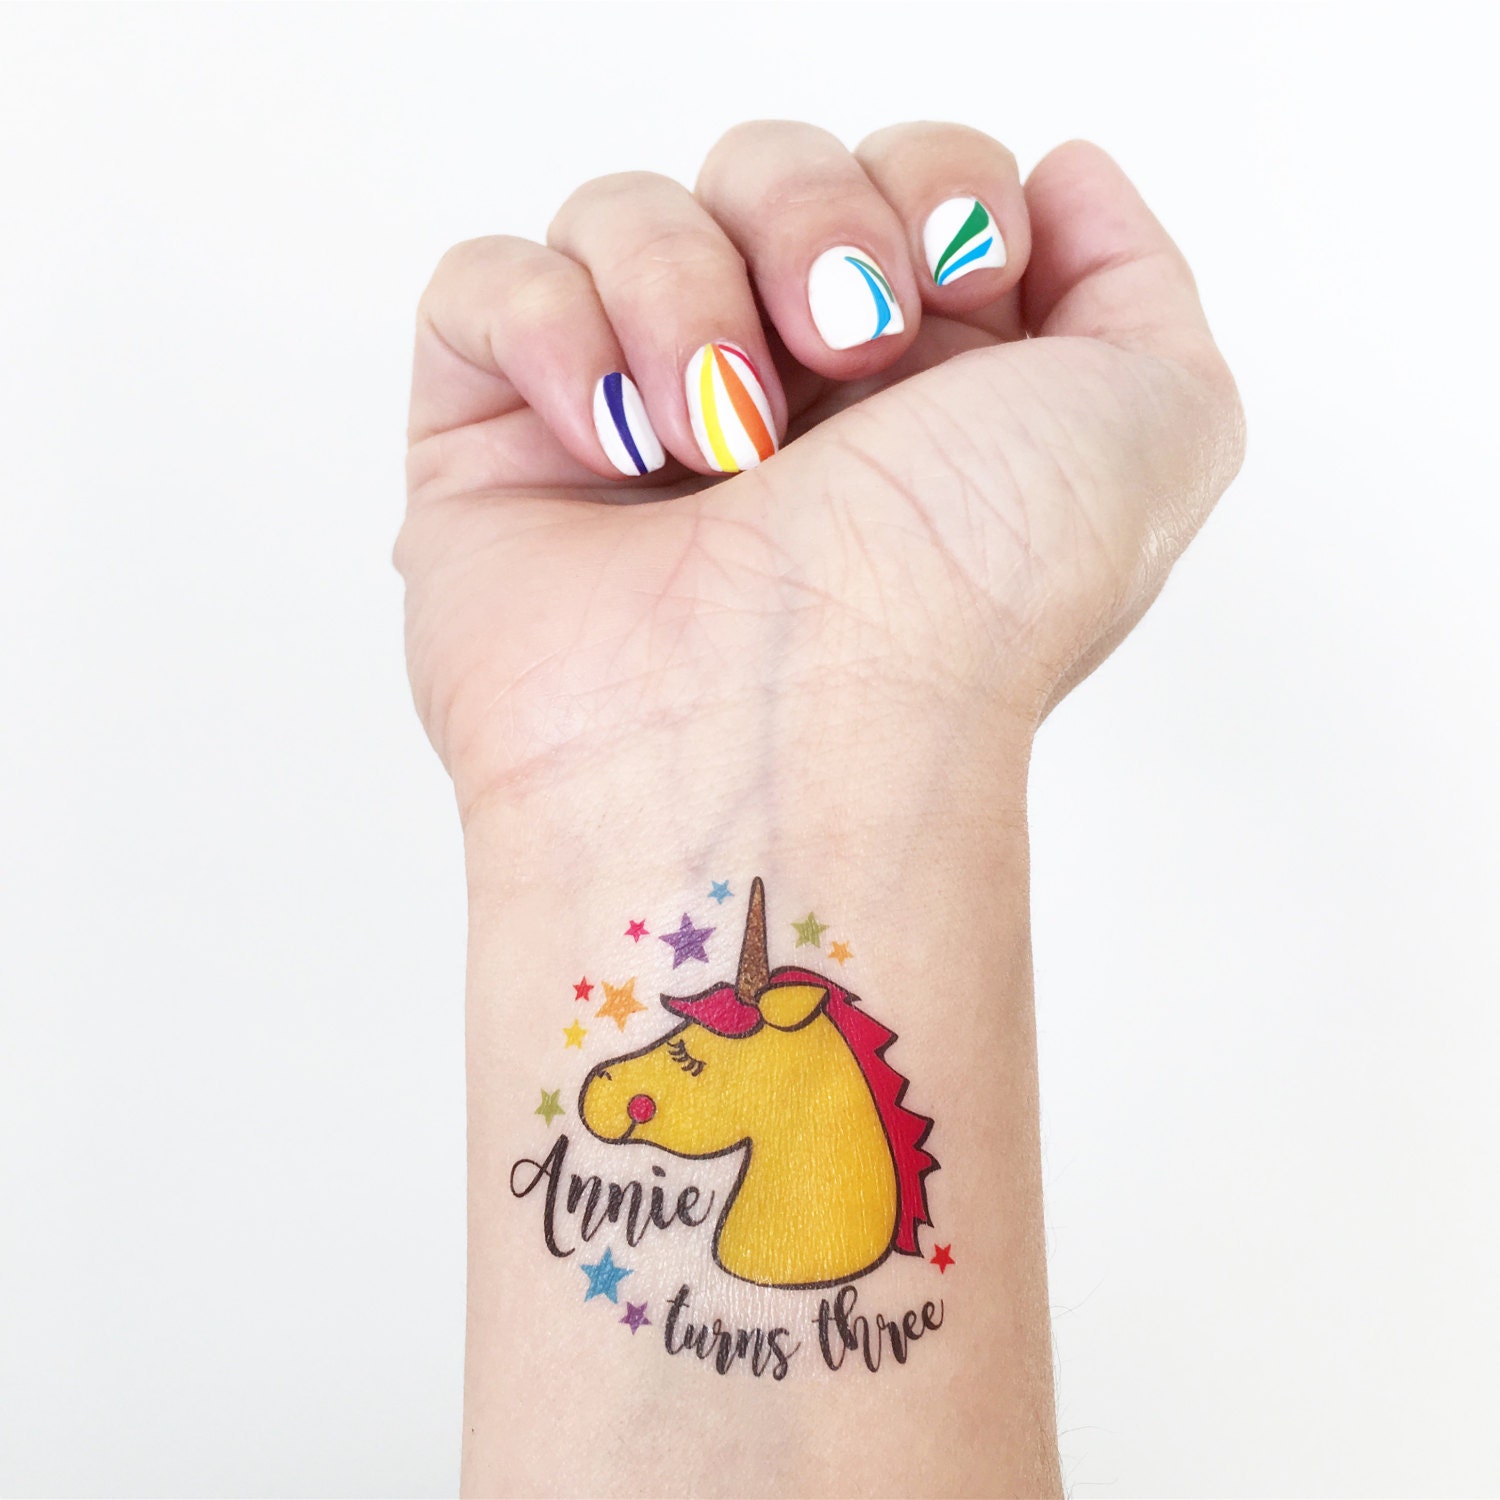 12 Custom Unicorn Temporary Tattoos - Perfect Party Favors!